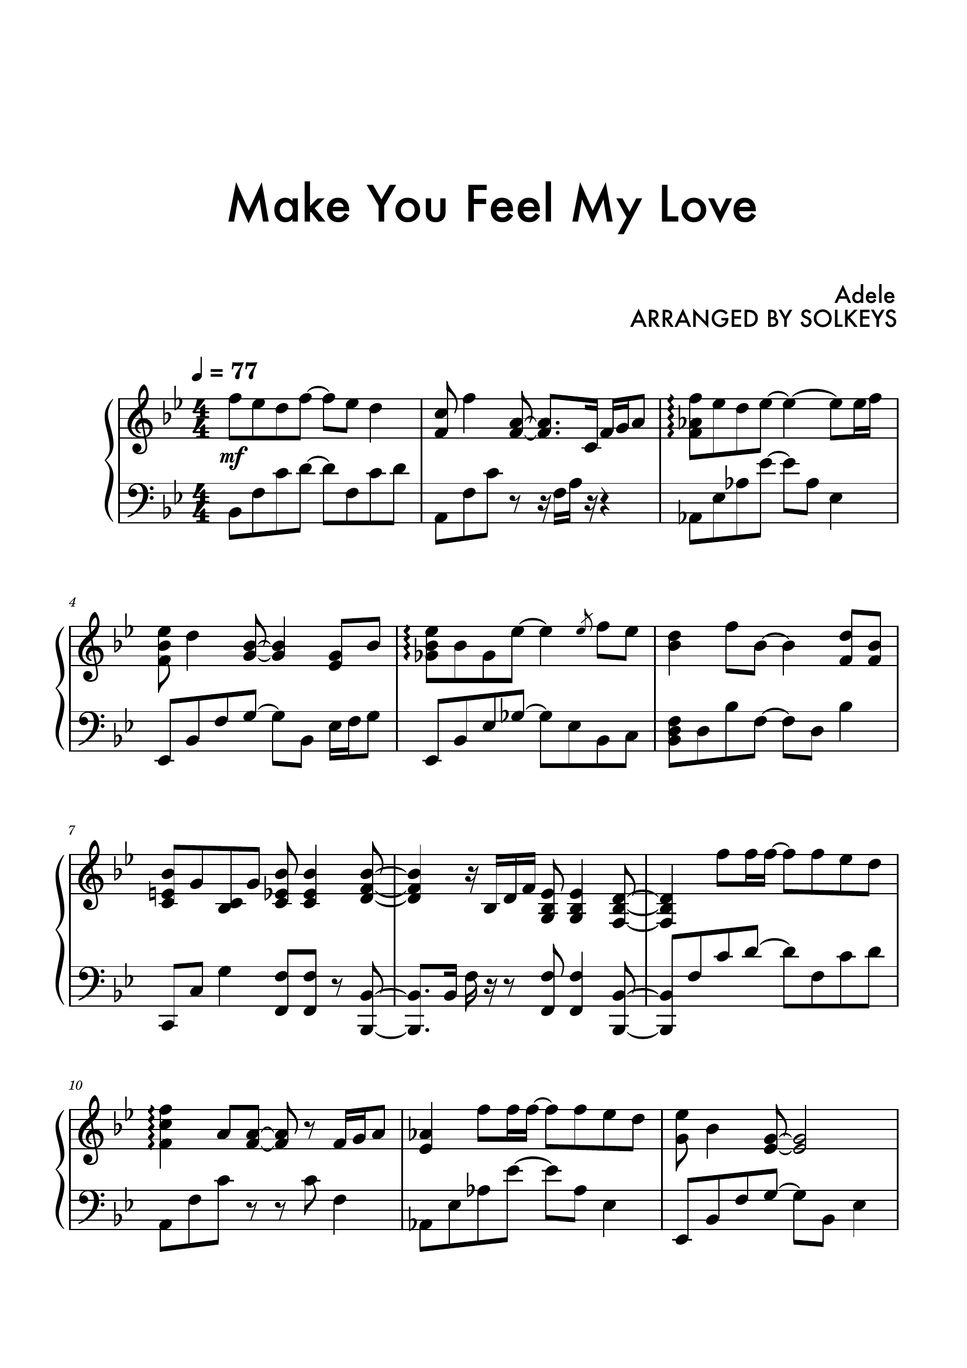 Adele - Make You Feel My Love by SolKeys